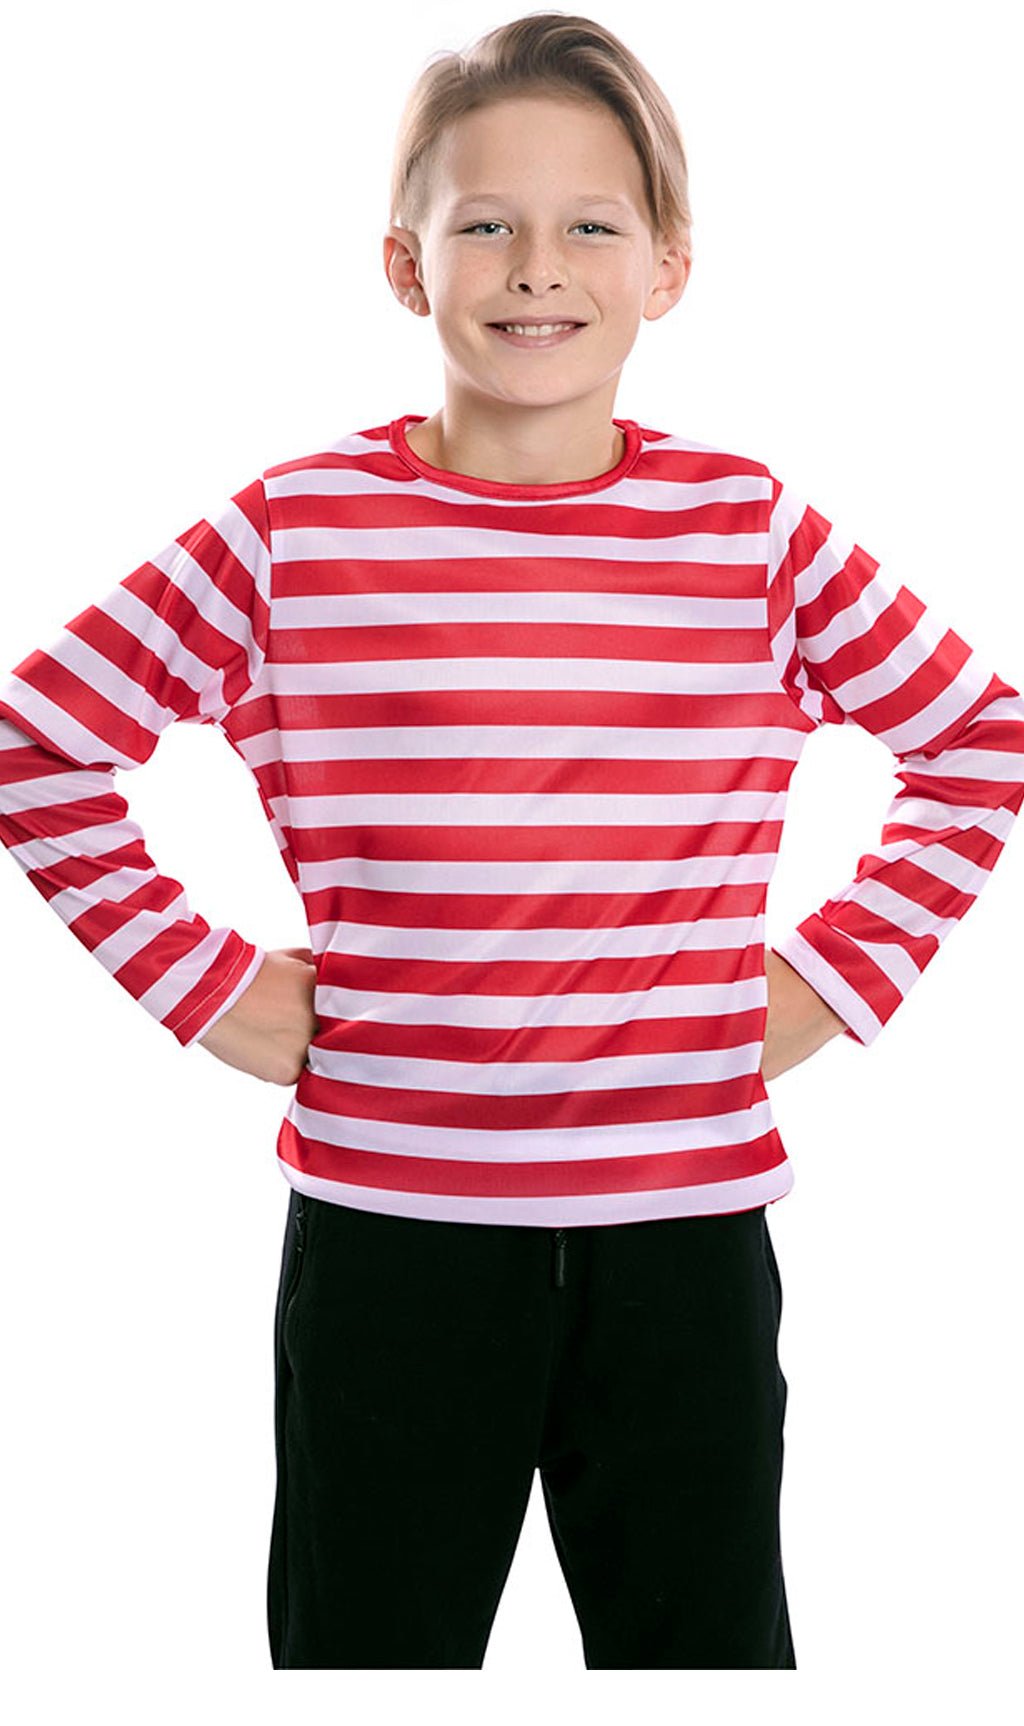 Comprar online Camiseta de Rayas Rojas infantil